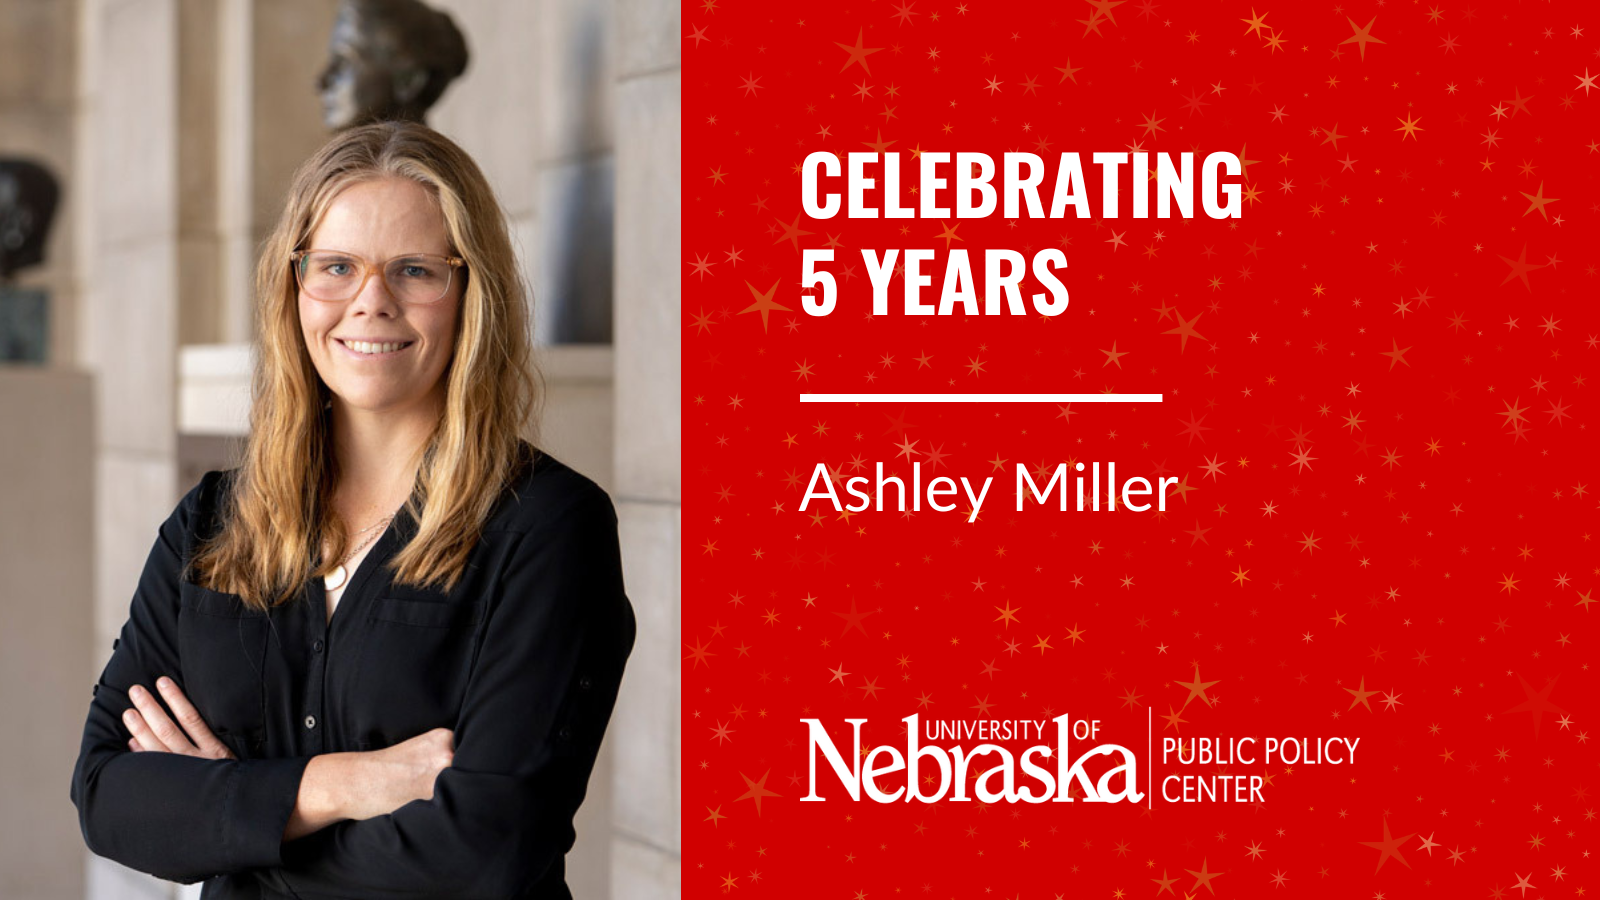 Ashley Miller celebrates 5 years at NU